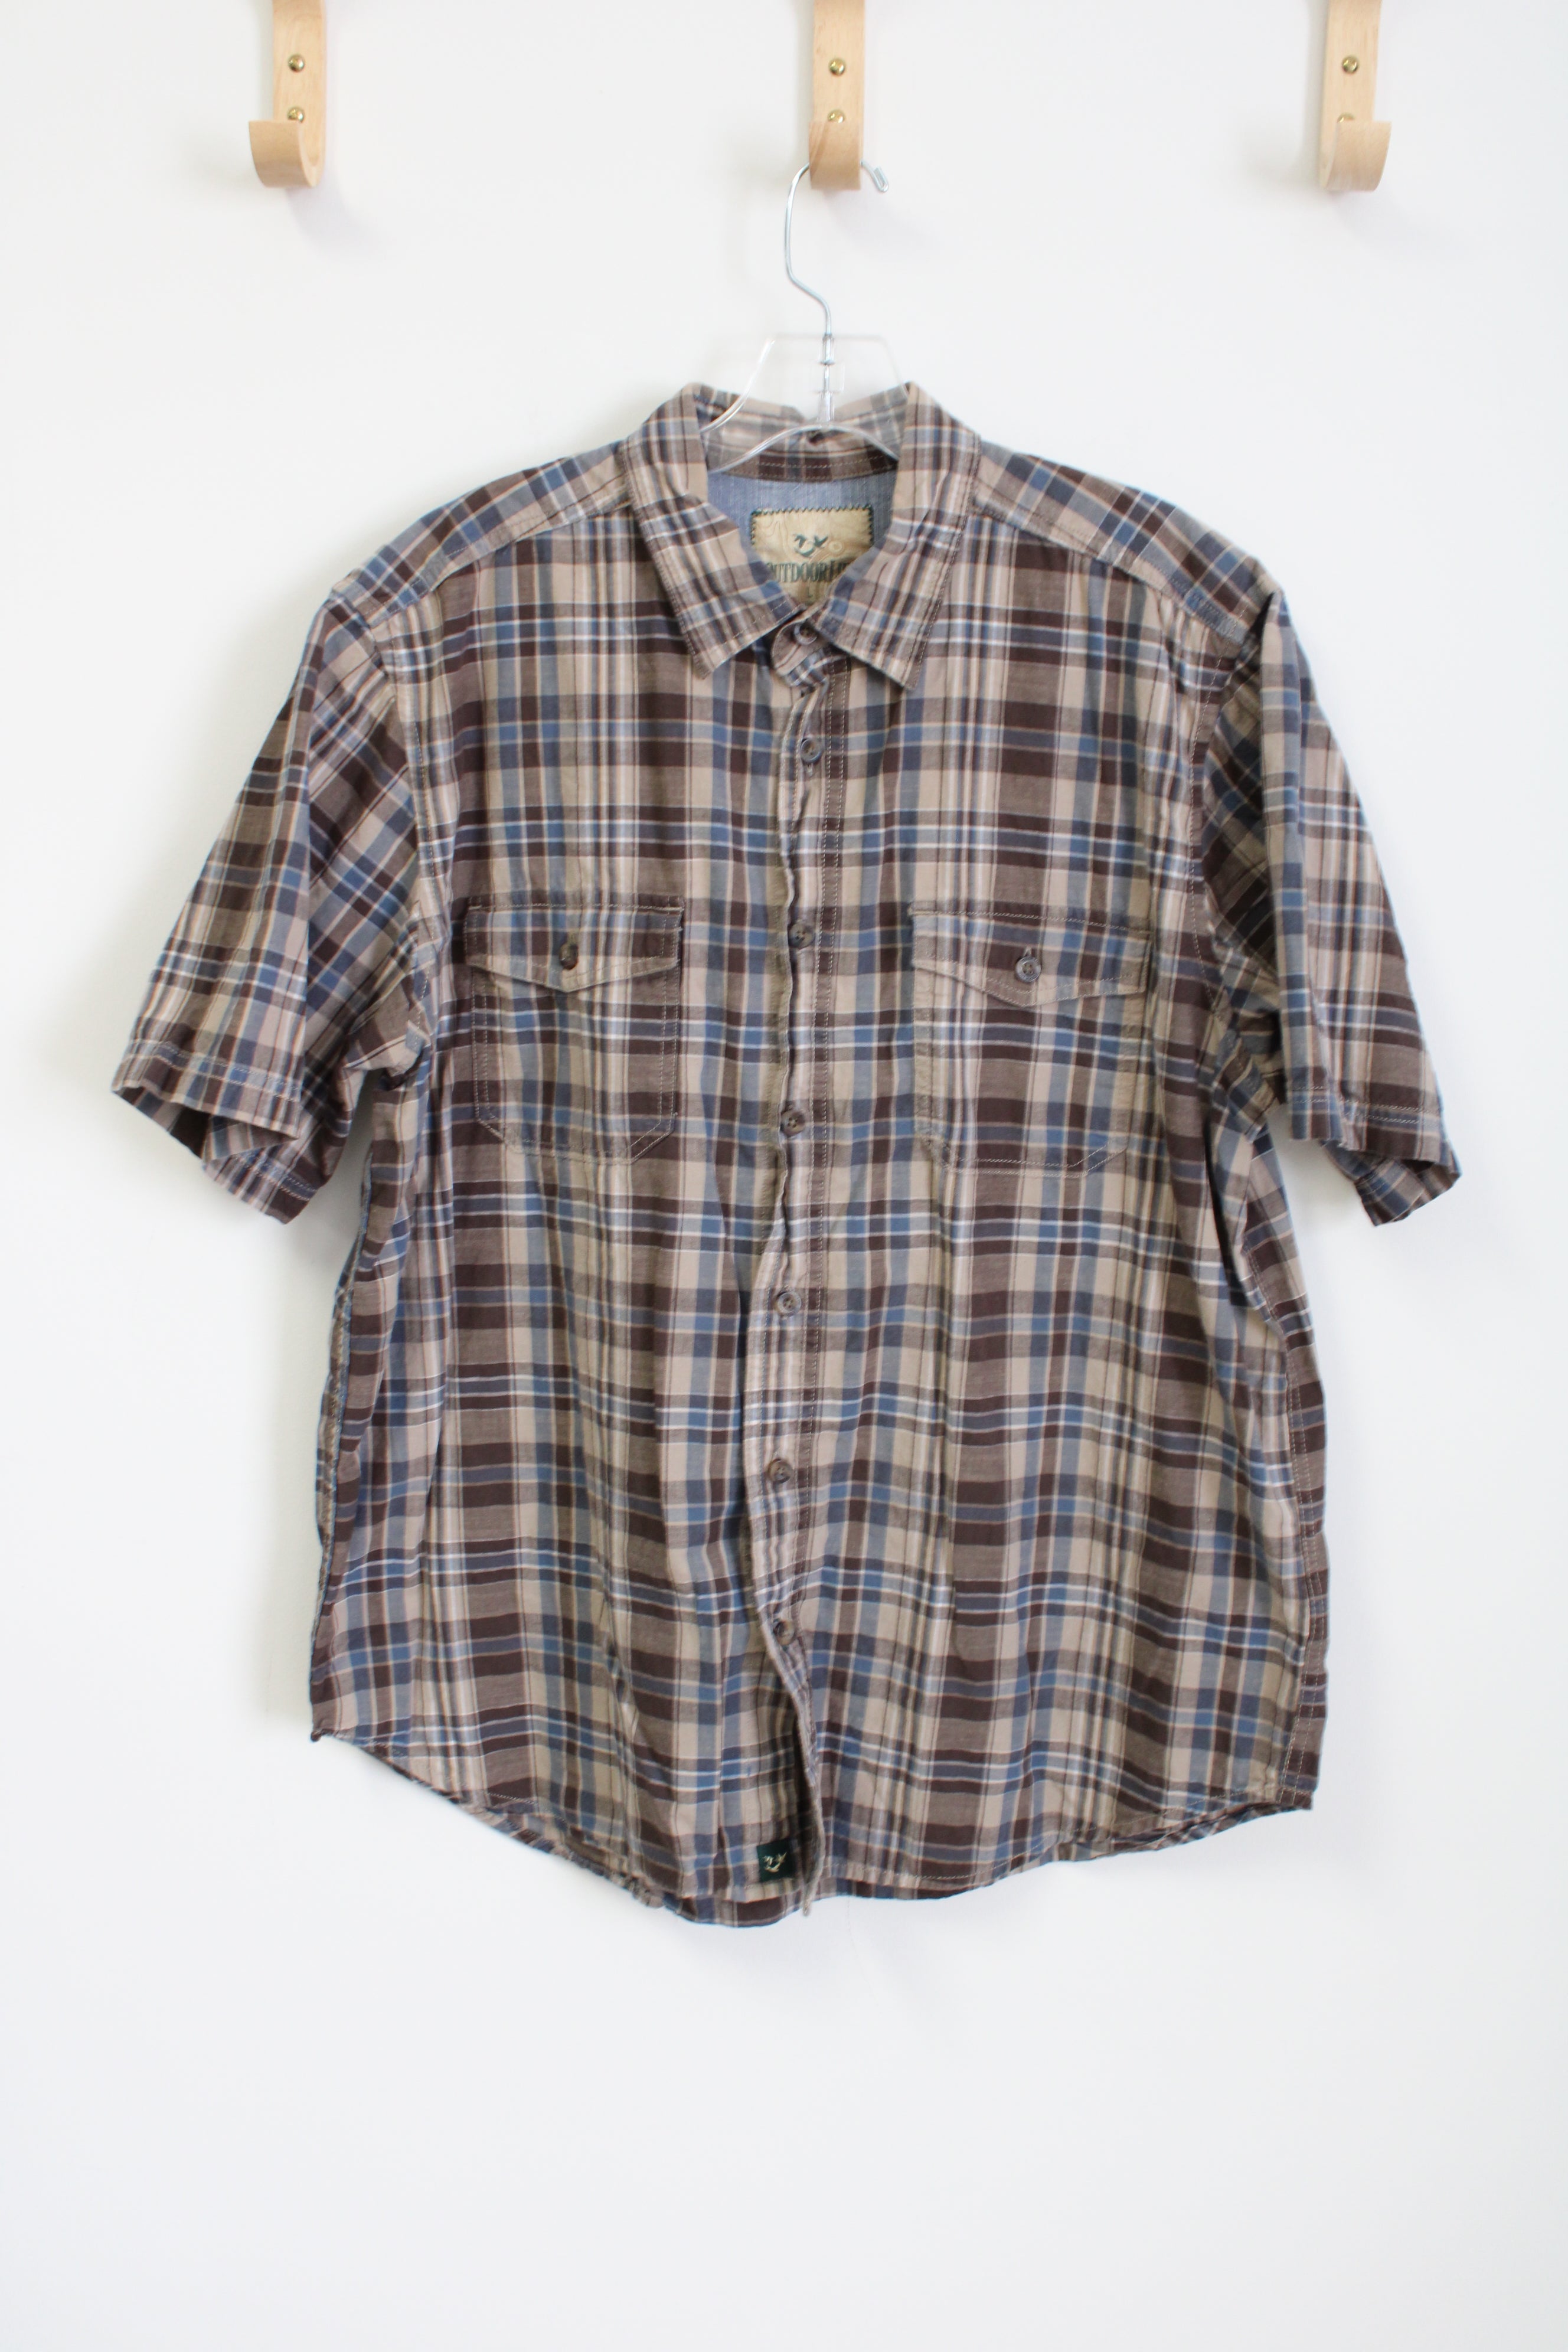 OutdoorLife Brown Plaid Button Down Shirt | L